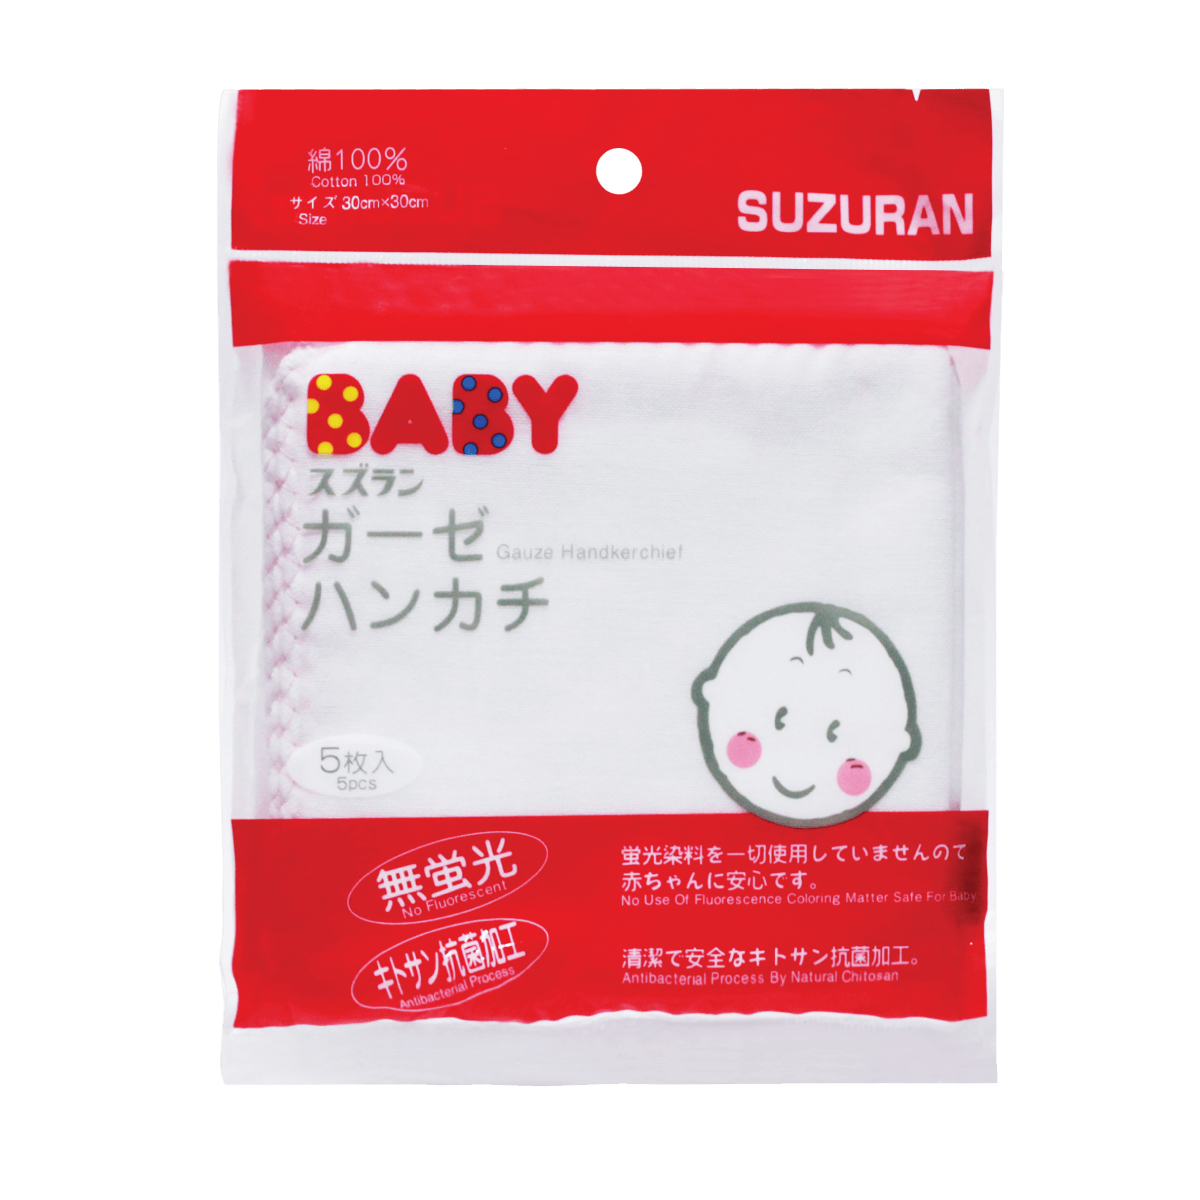 Suzuran Baby Gauze Handkerchief 5pcs - Fravi Sdn Bhd (Bebehaus) 562119-D